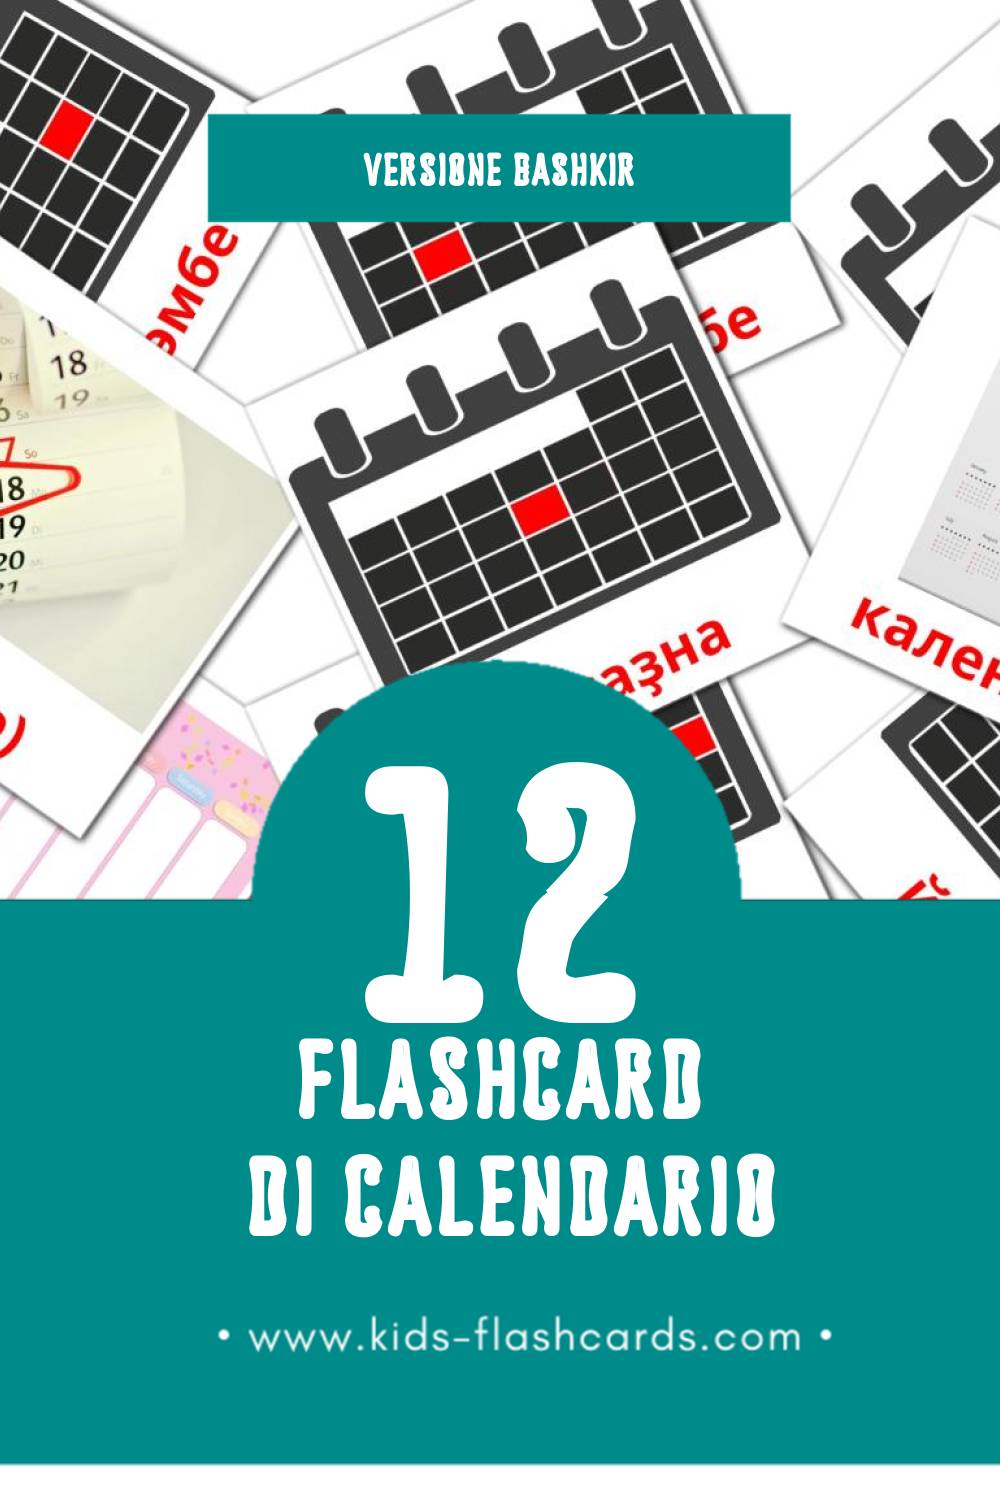 Schede visive sugli календарь per bambini (24 schede in Bashkir)